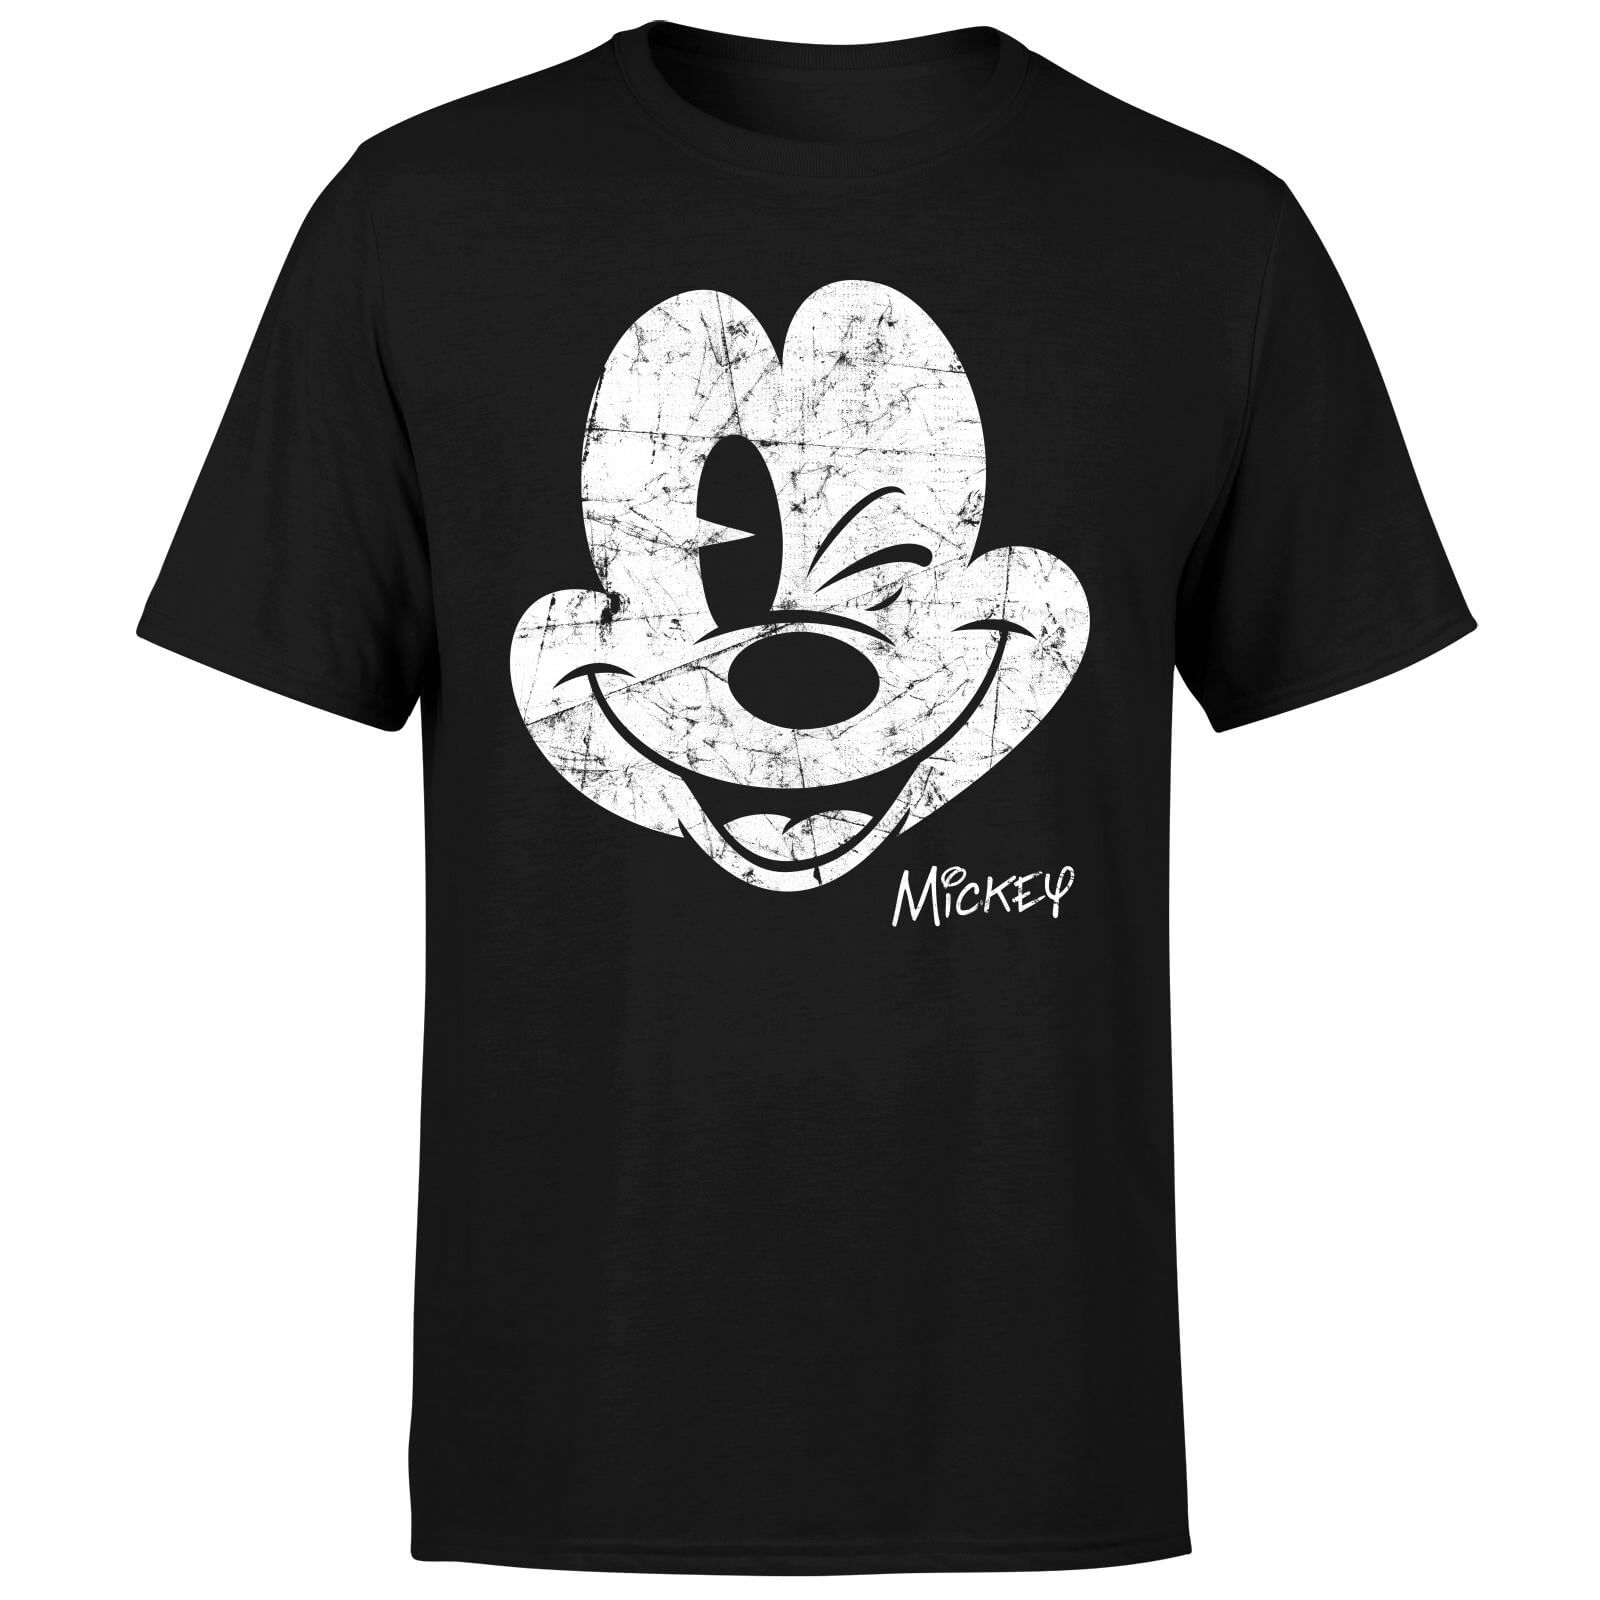 Disney Mickey Mouse Worn Face T-Shirt - Black - M